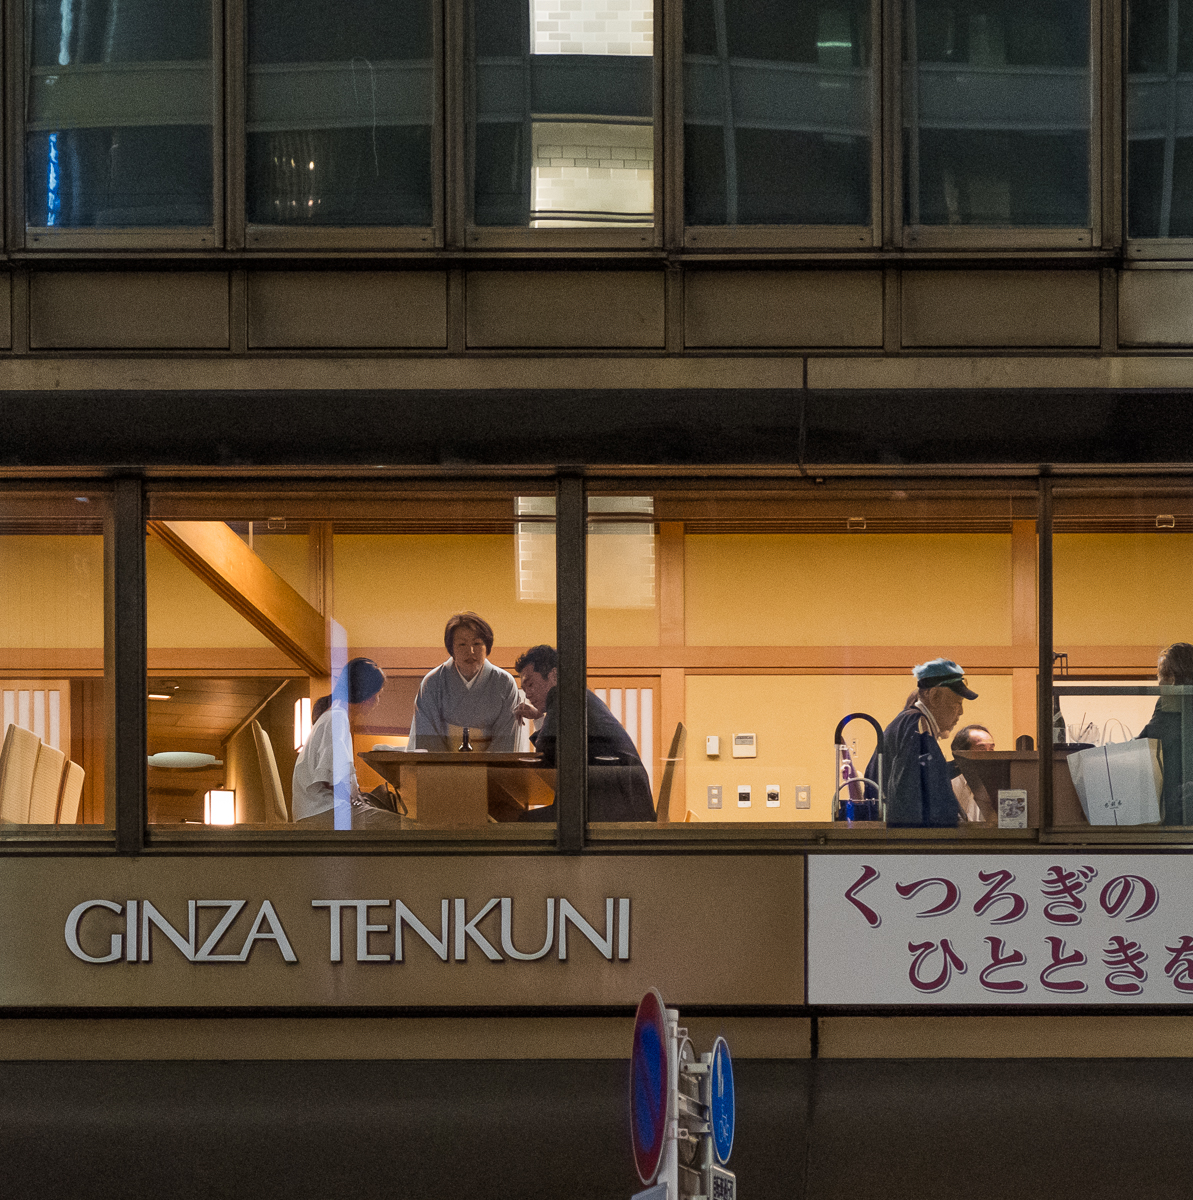 Ginza, Tokyo, Japan, 2017